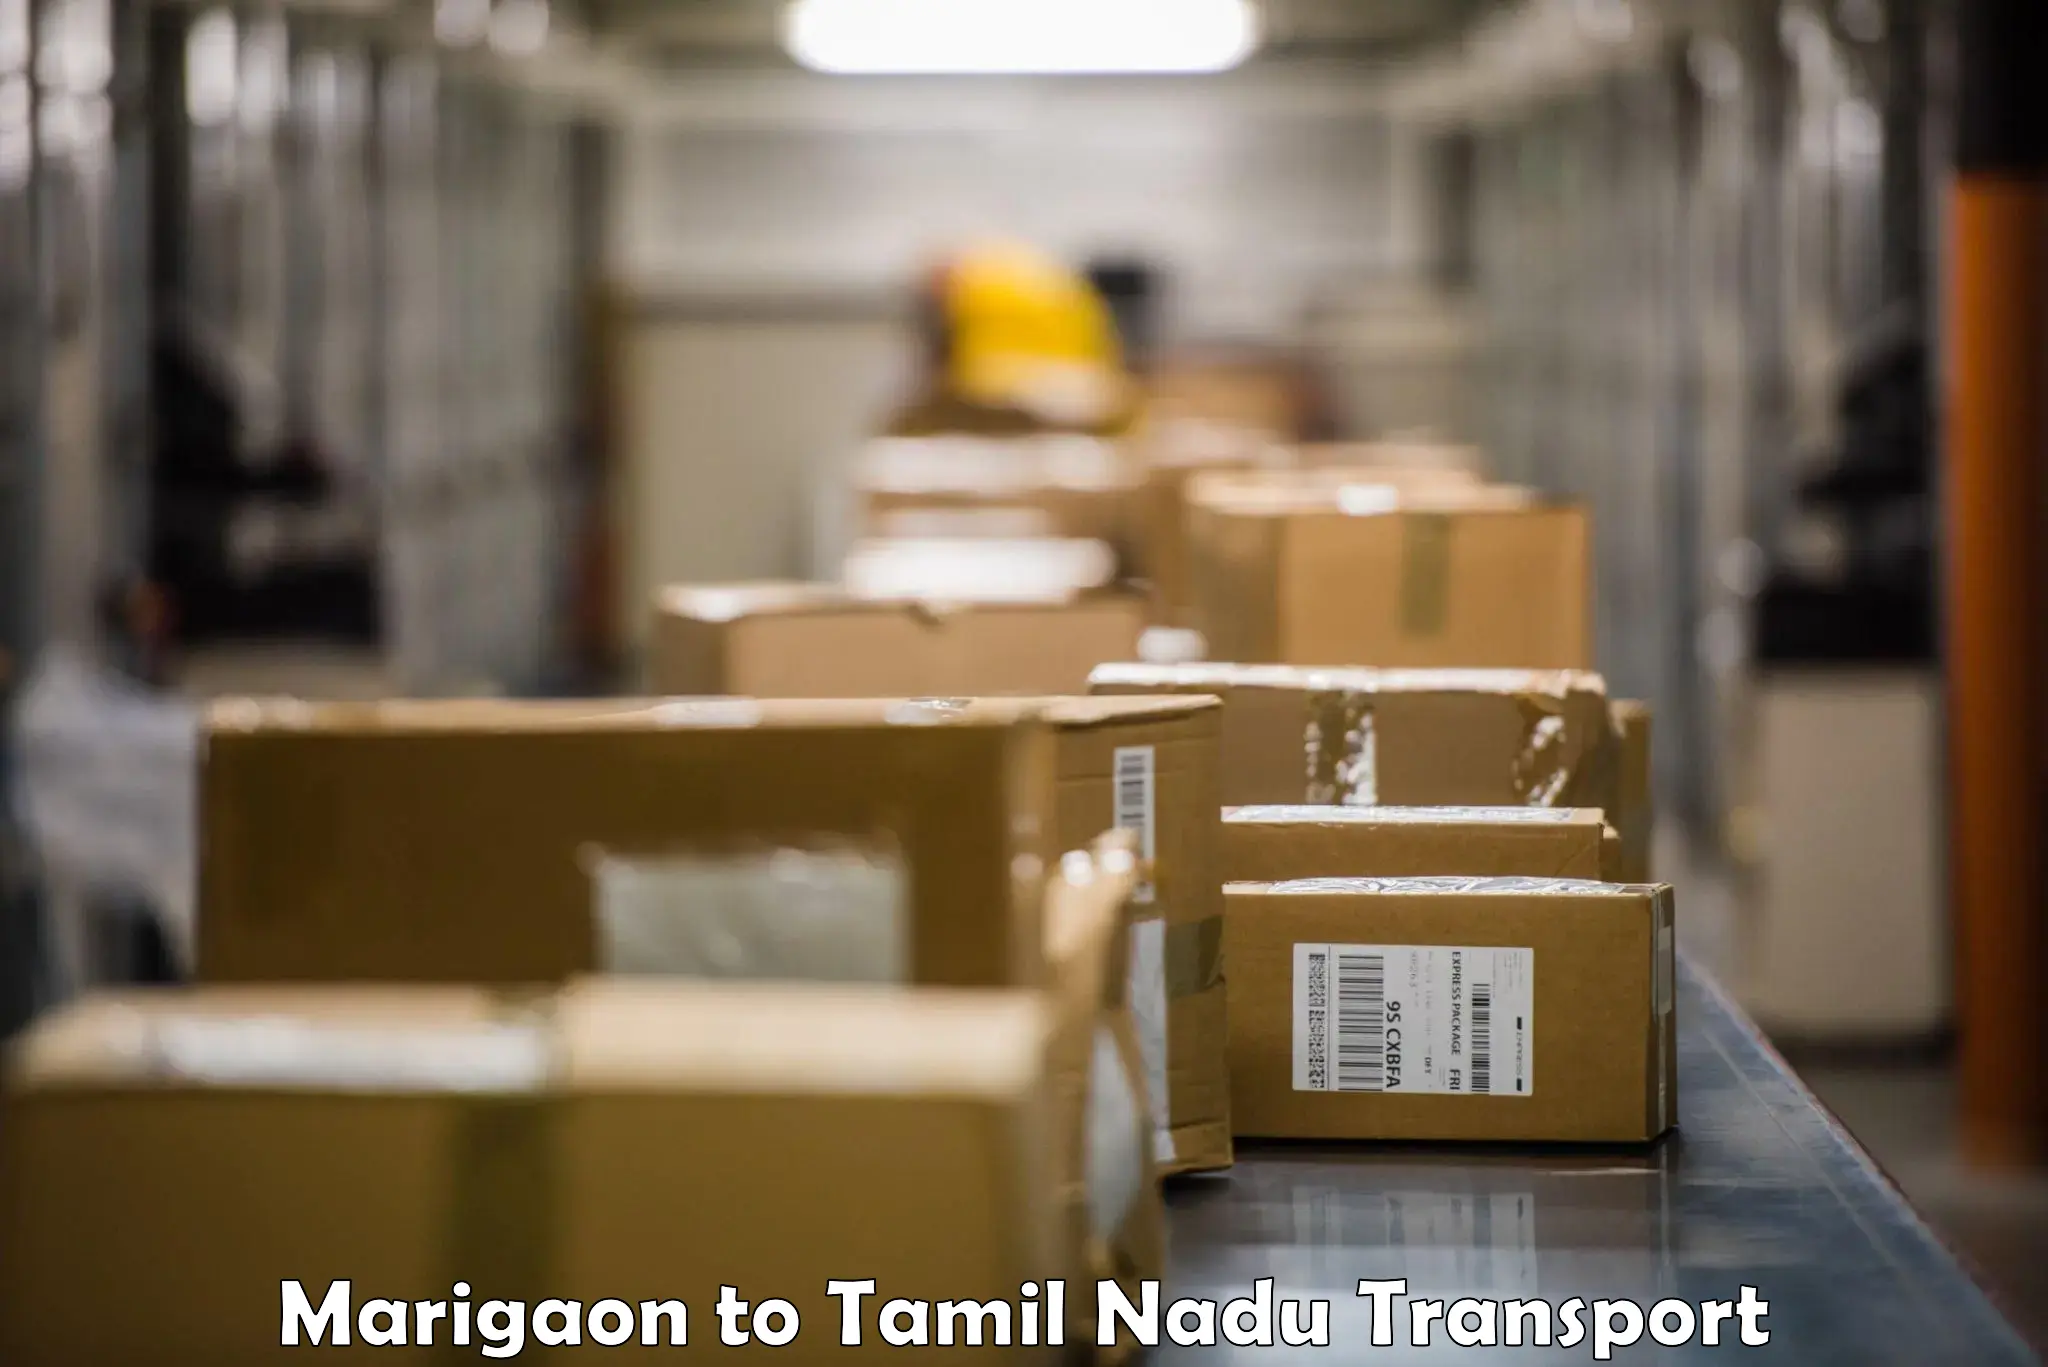 Truck transport companies in India Marigaon to Palayankottai